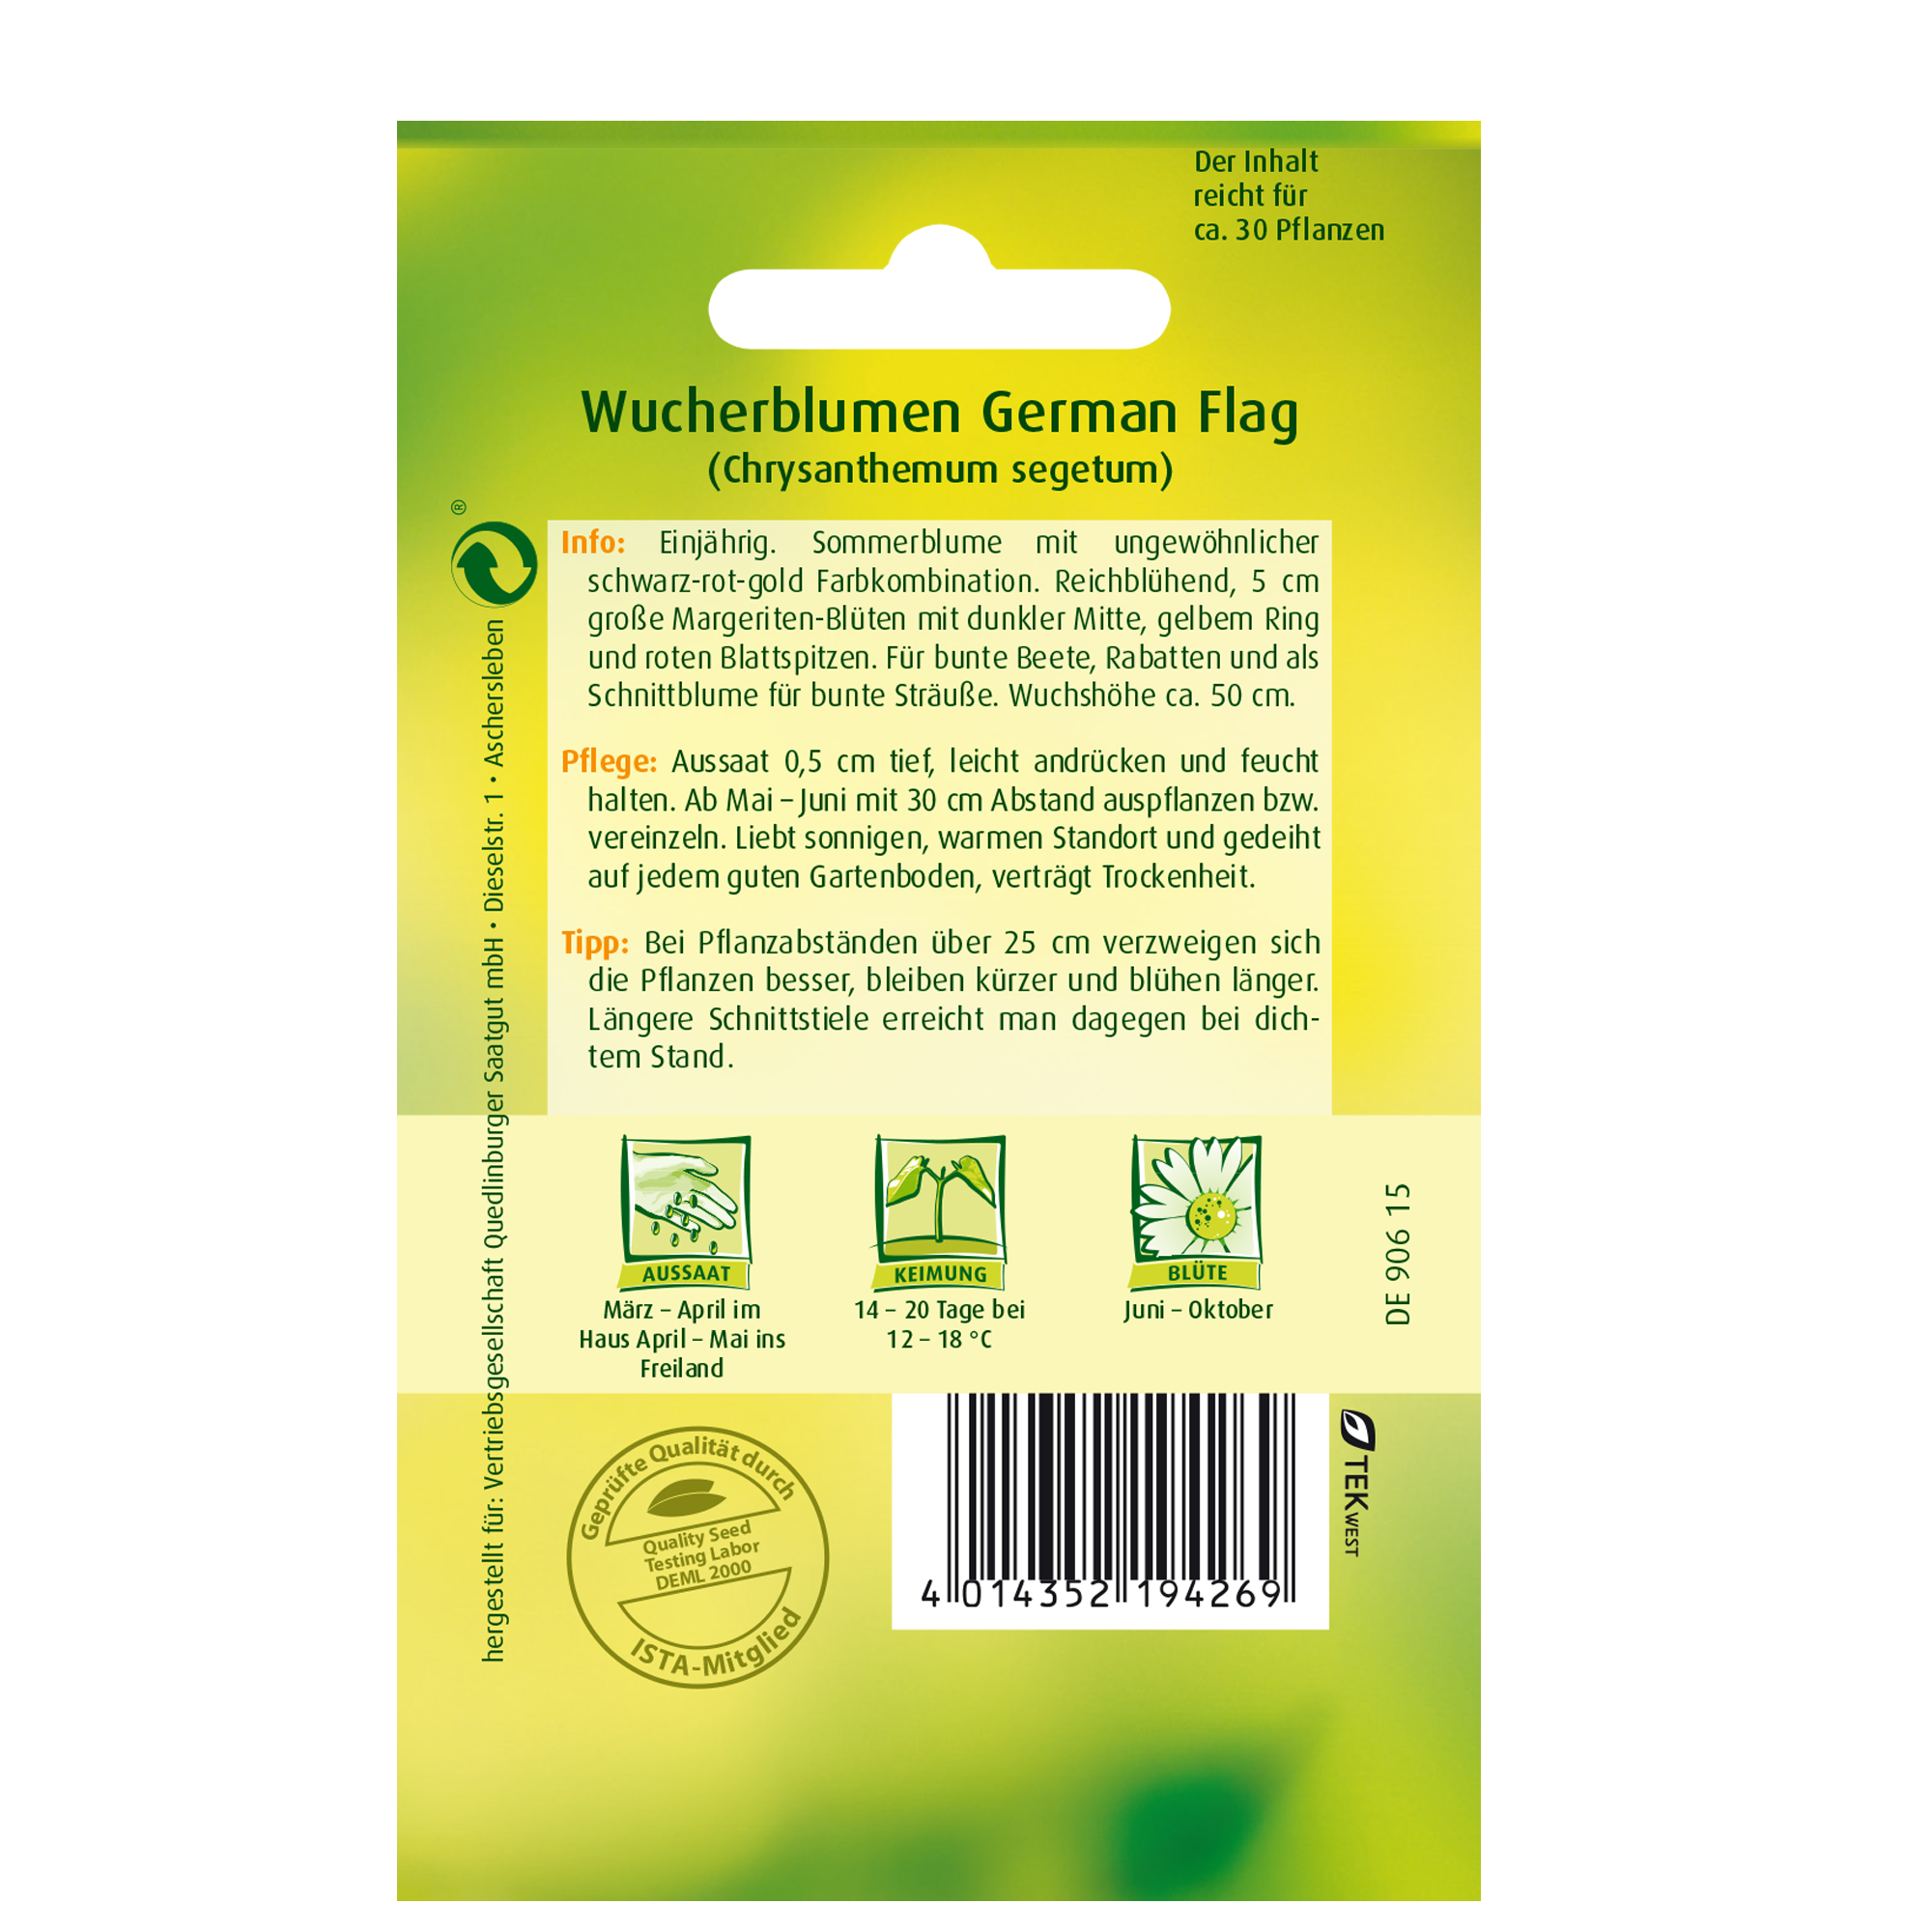 Wucherblumen 'German Flag' + product picture